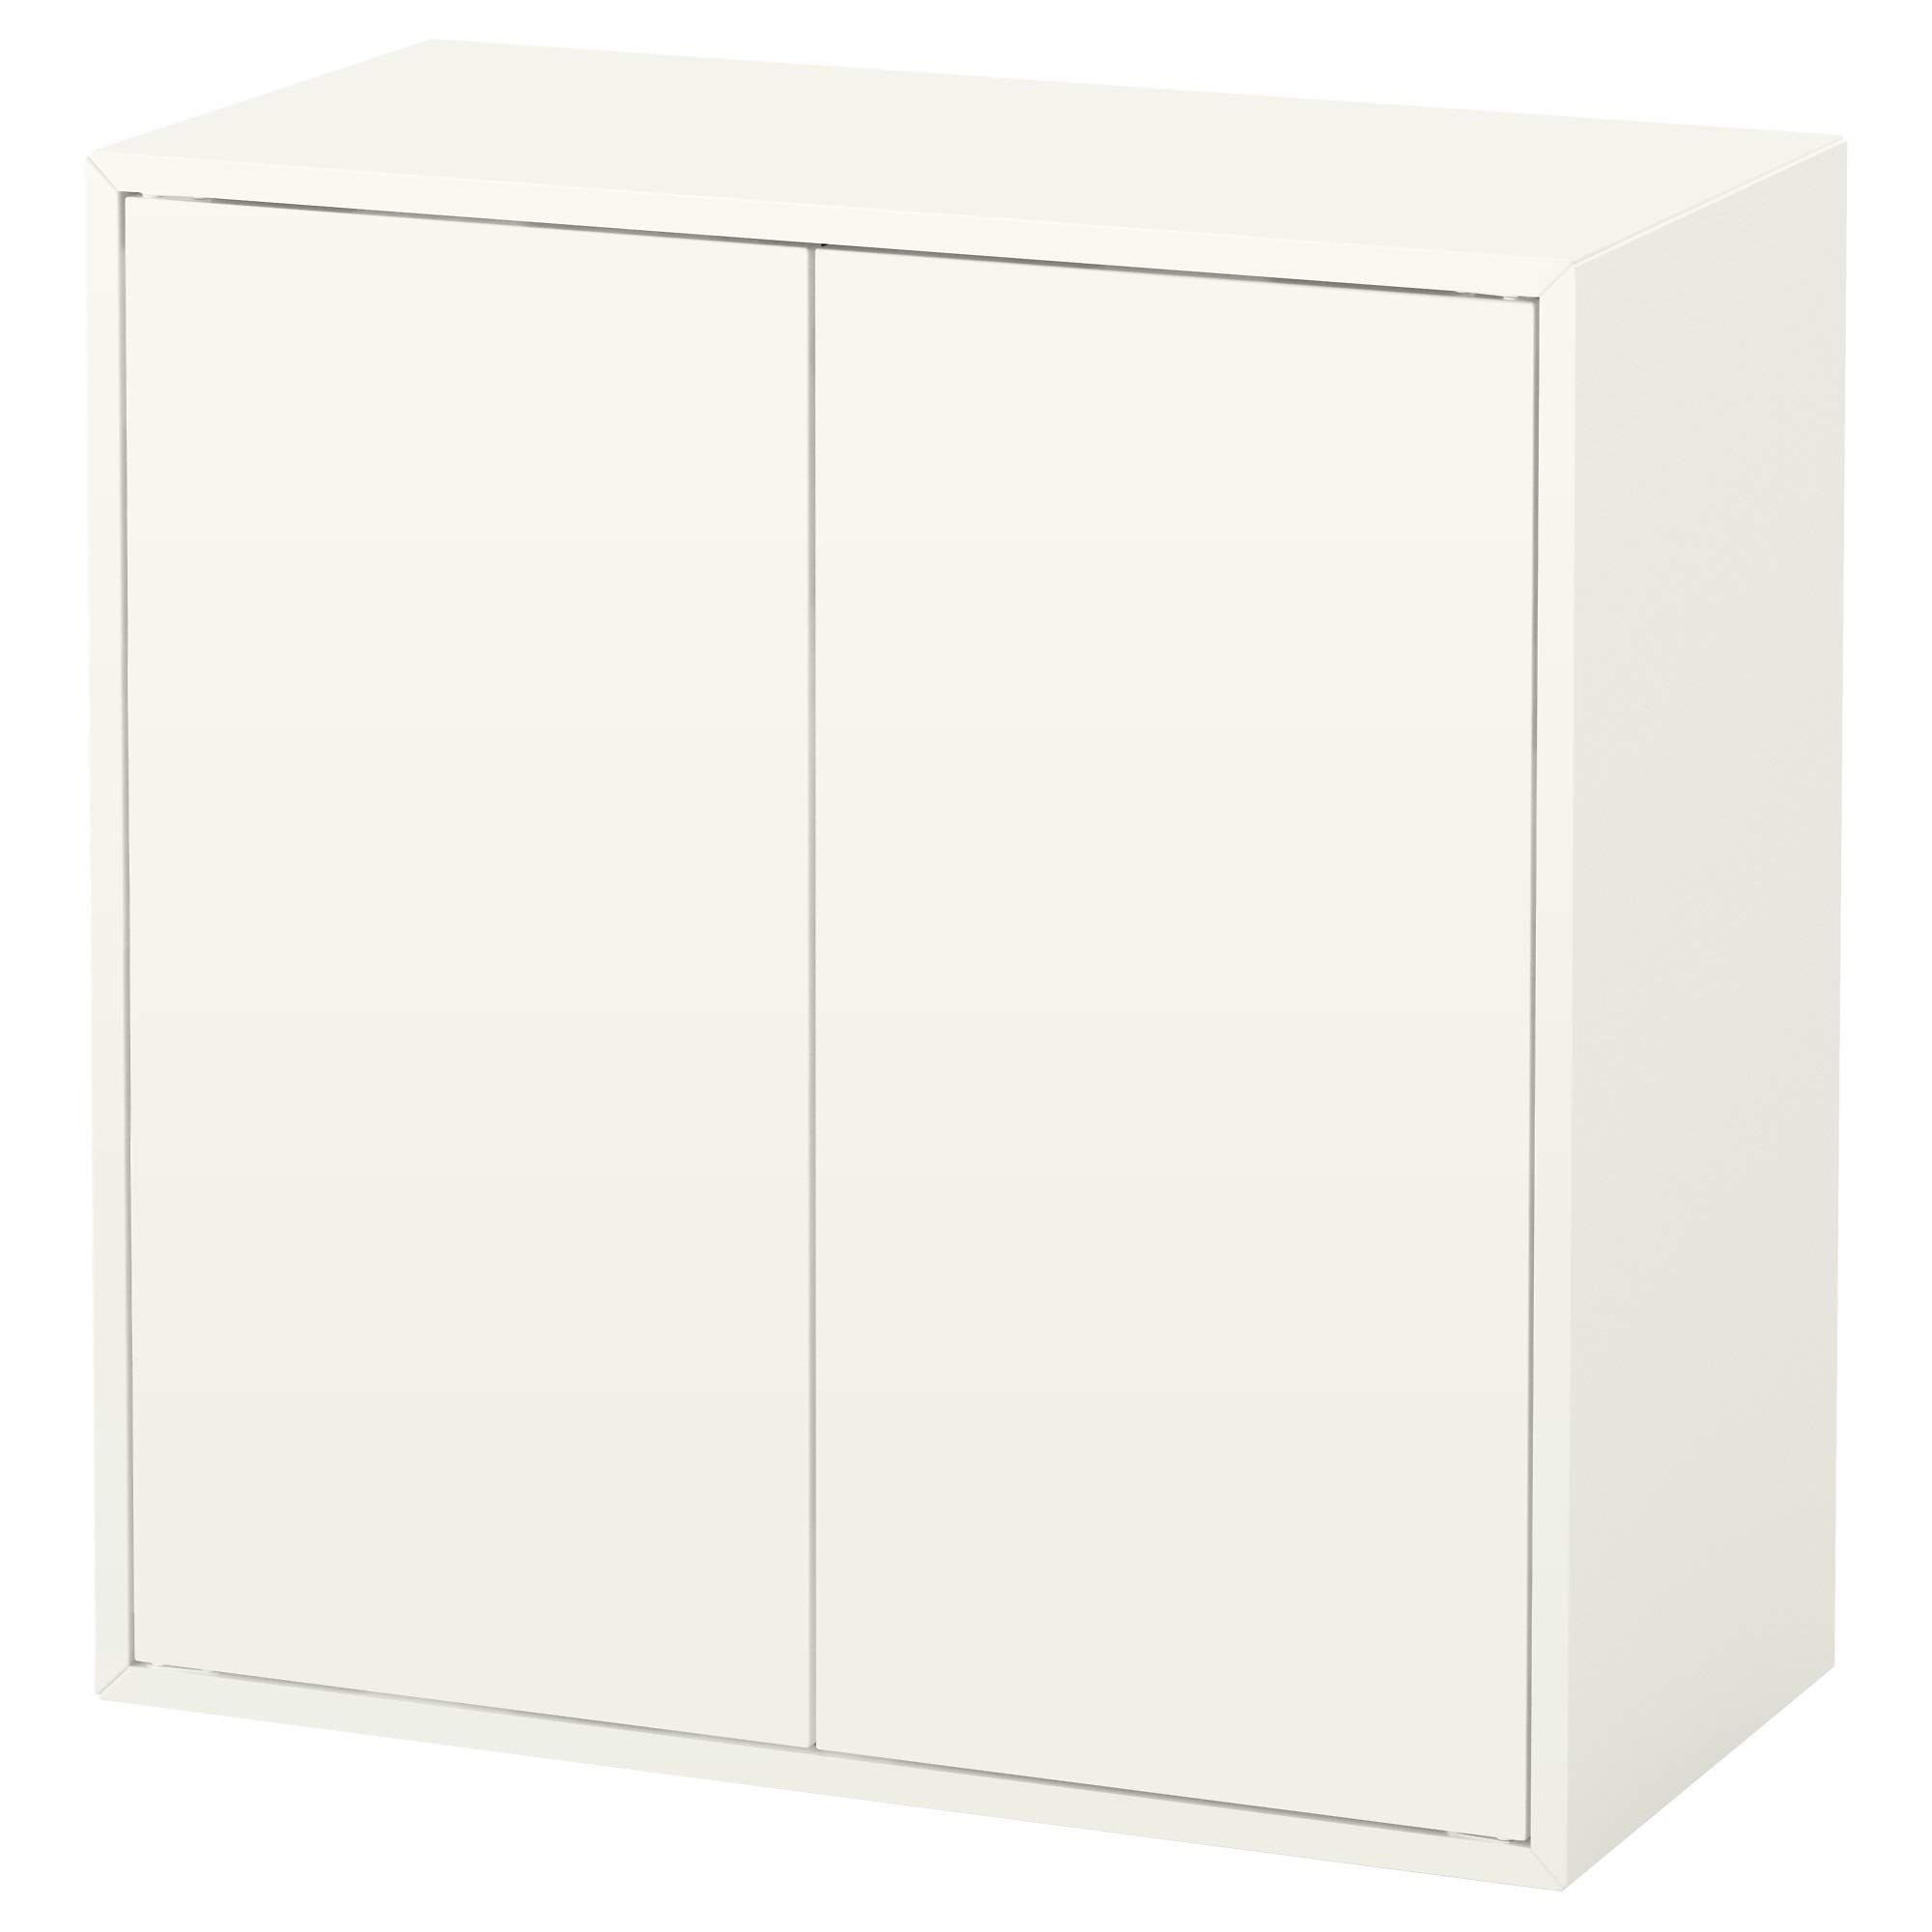 IKEA Eket Cabinet with 2 Doors and Shelf, White | Amazon (US)